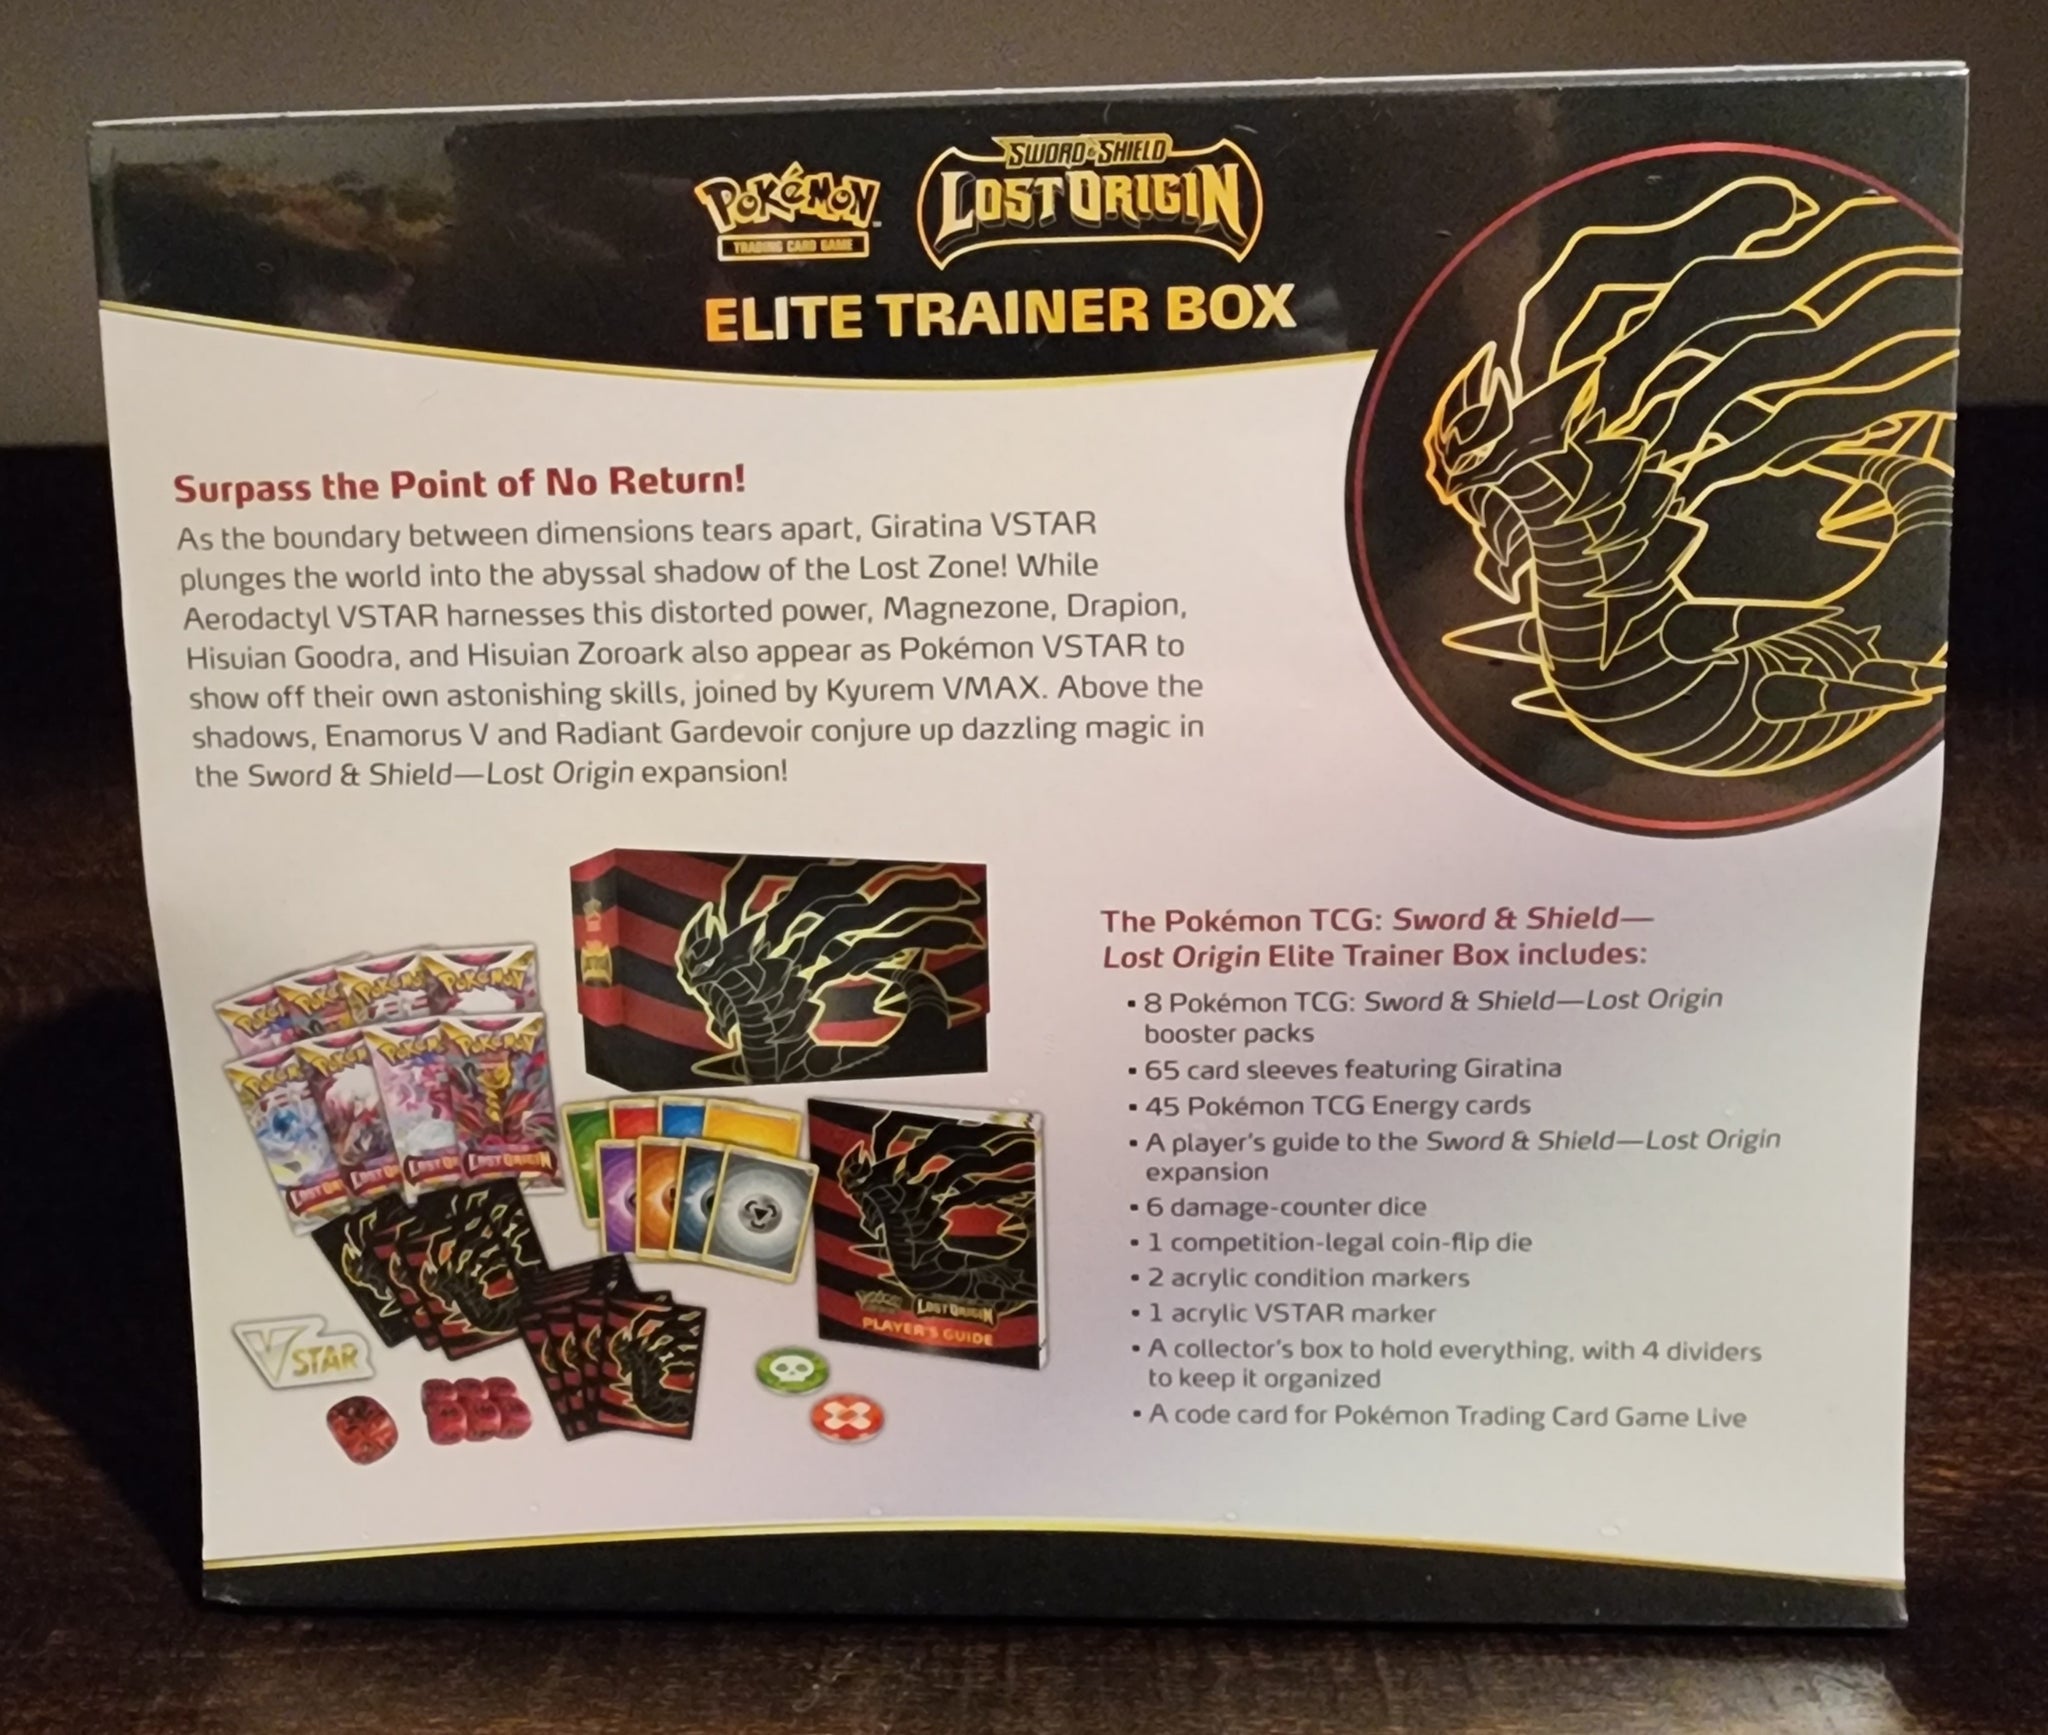 Pokémon TCG: Sword & Shield—Lost Origin Elite Trainer Box